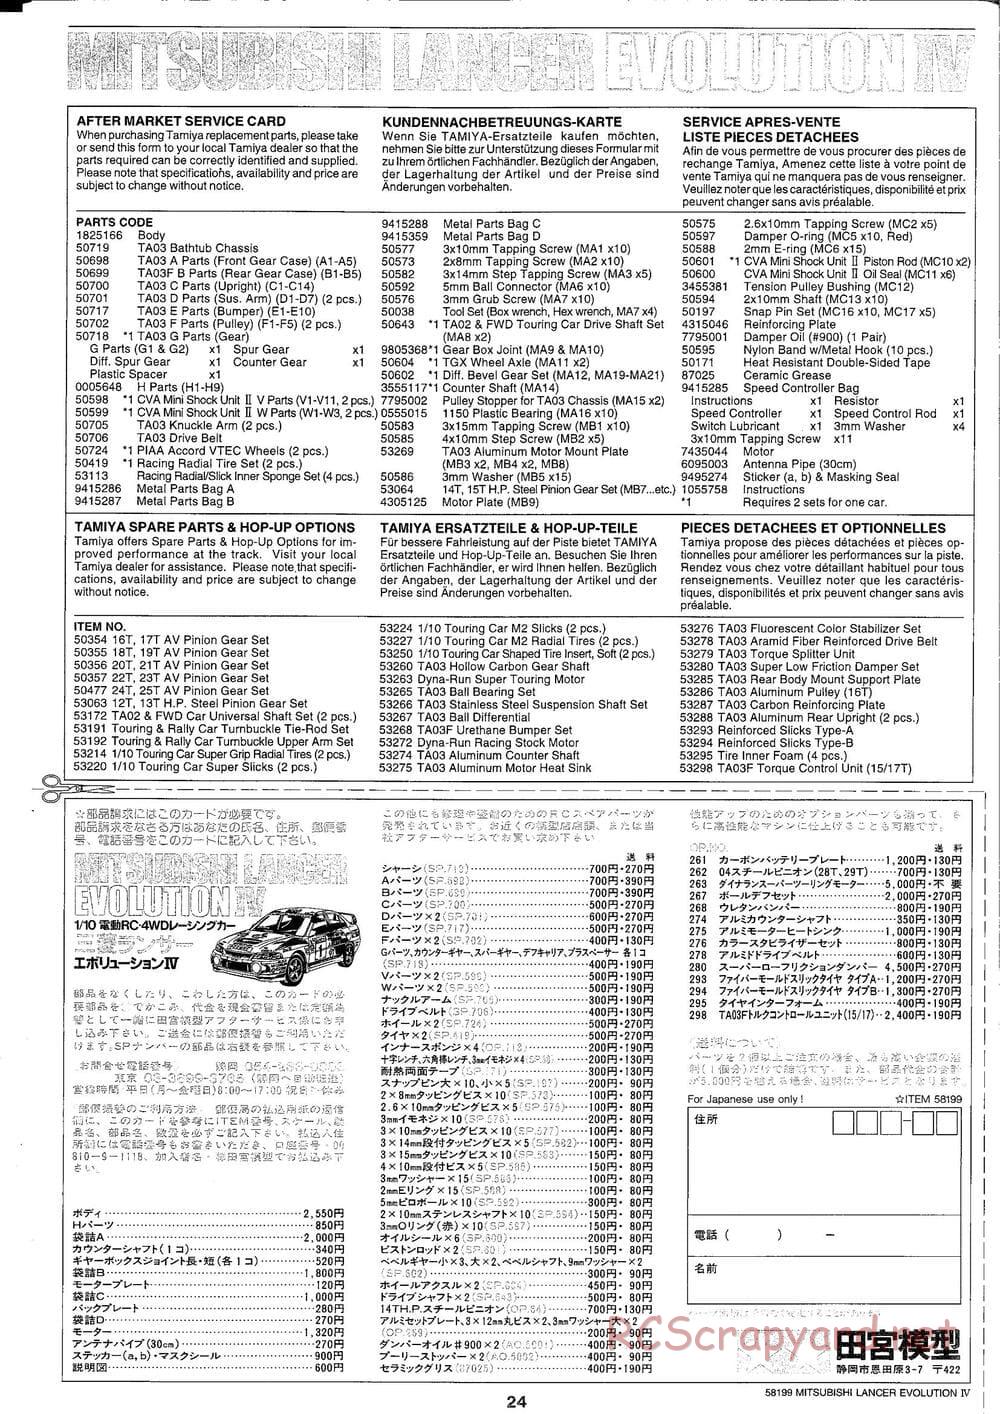 Tamiya - Mitsubishi Lancer Evolution IV - TA-03F Chassis - Manual - Page 24